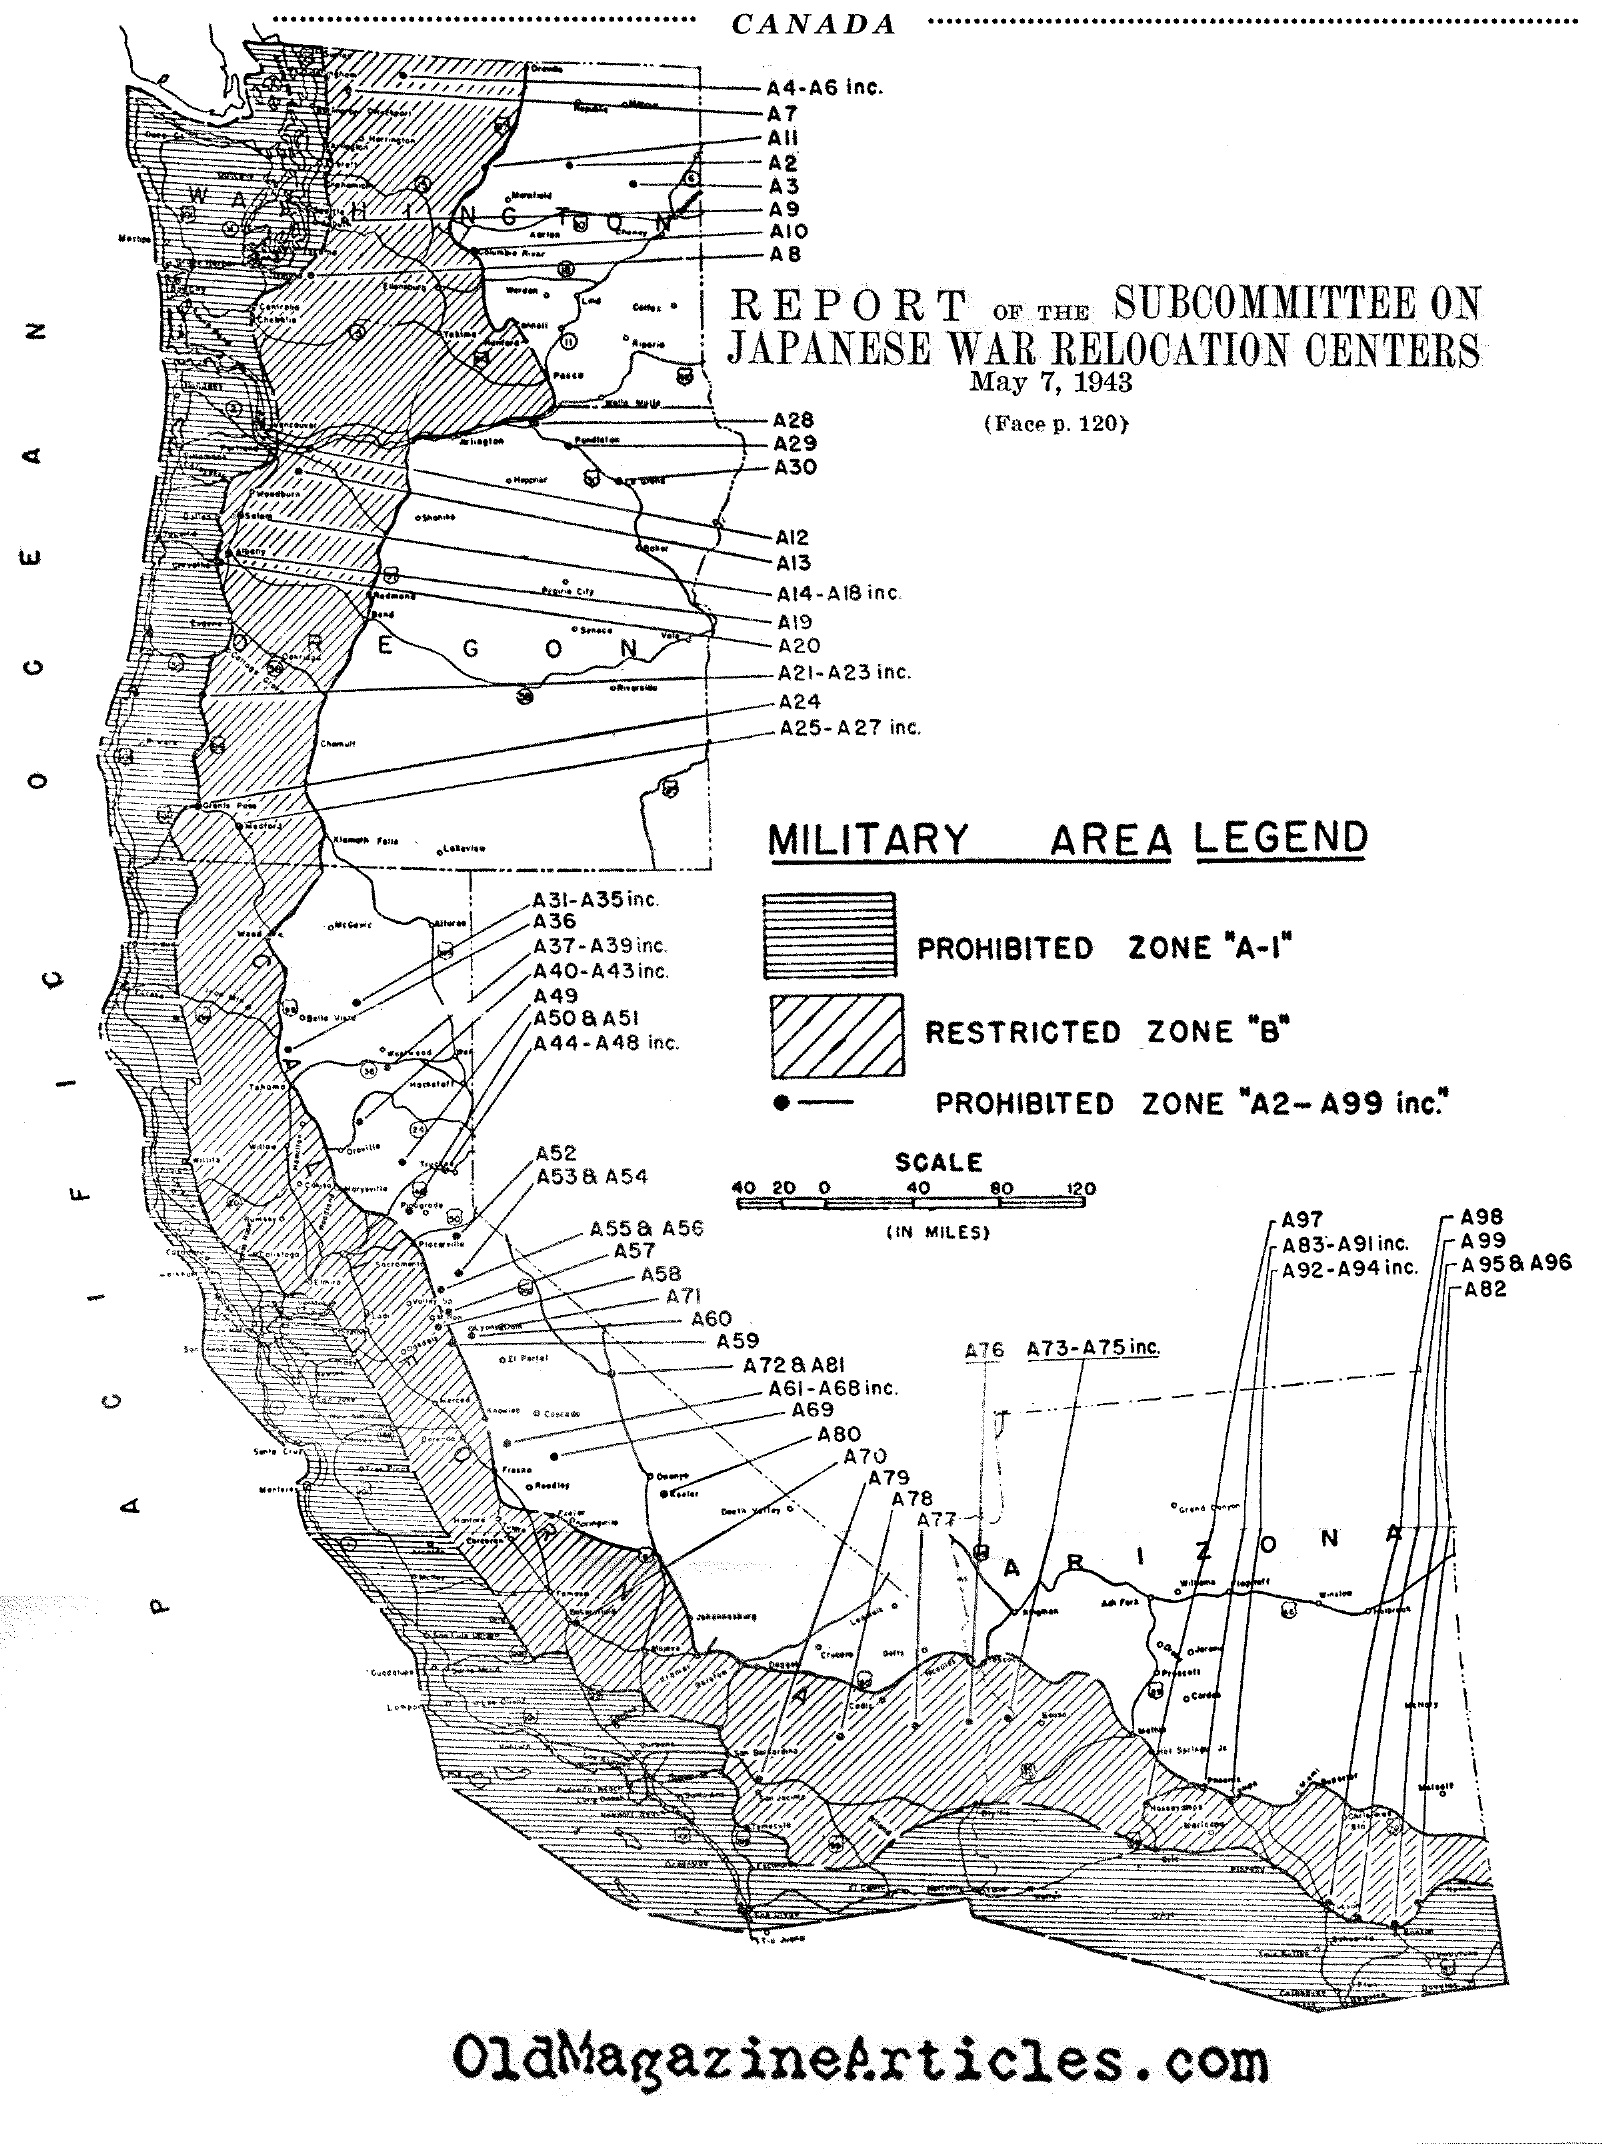 The West Coast as a Military Zone (U.S. Gov. 1943)